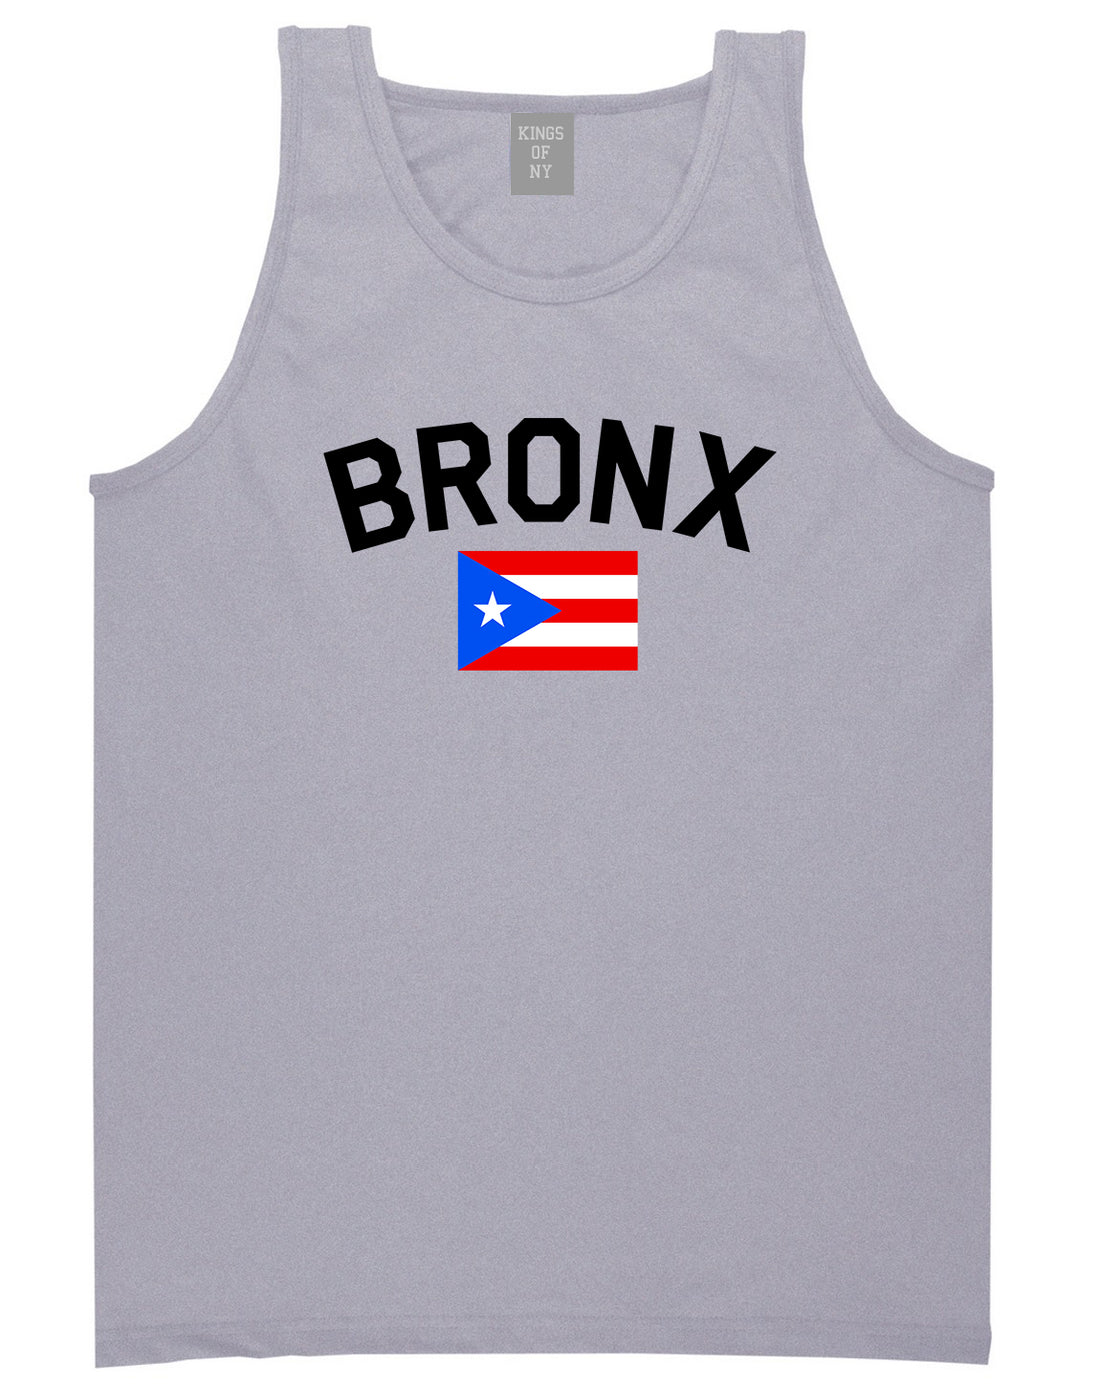 Bronx Puerto Rico Flag Mens Tank Top T-Shirt Grey